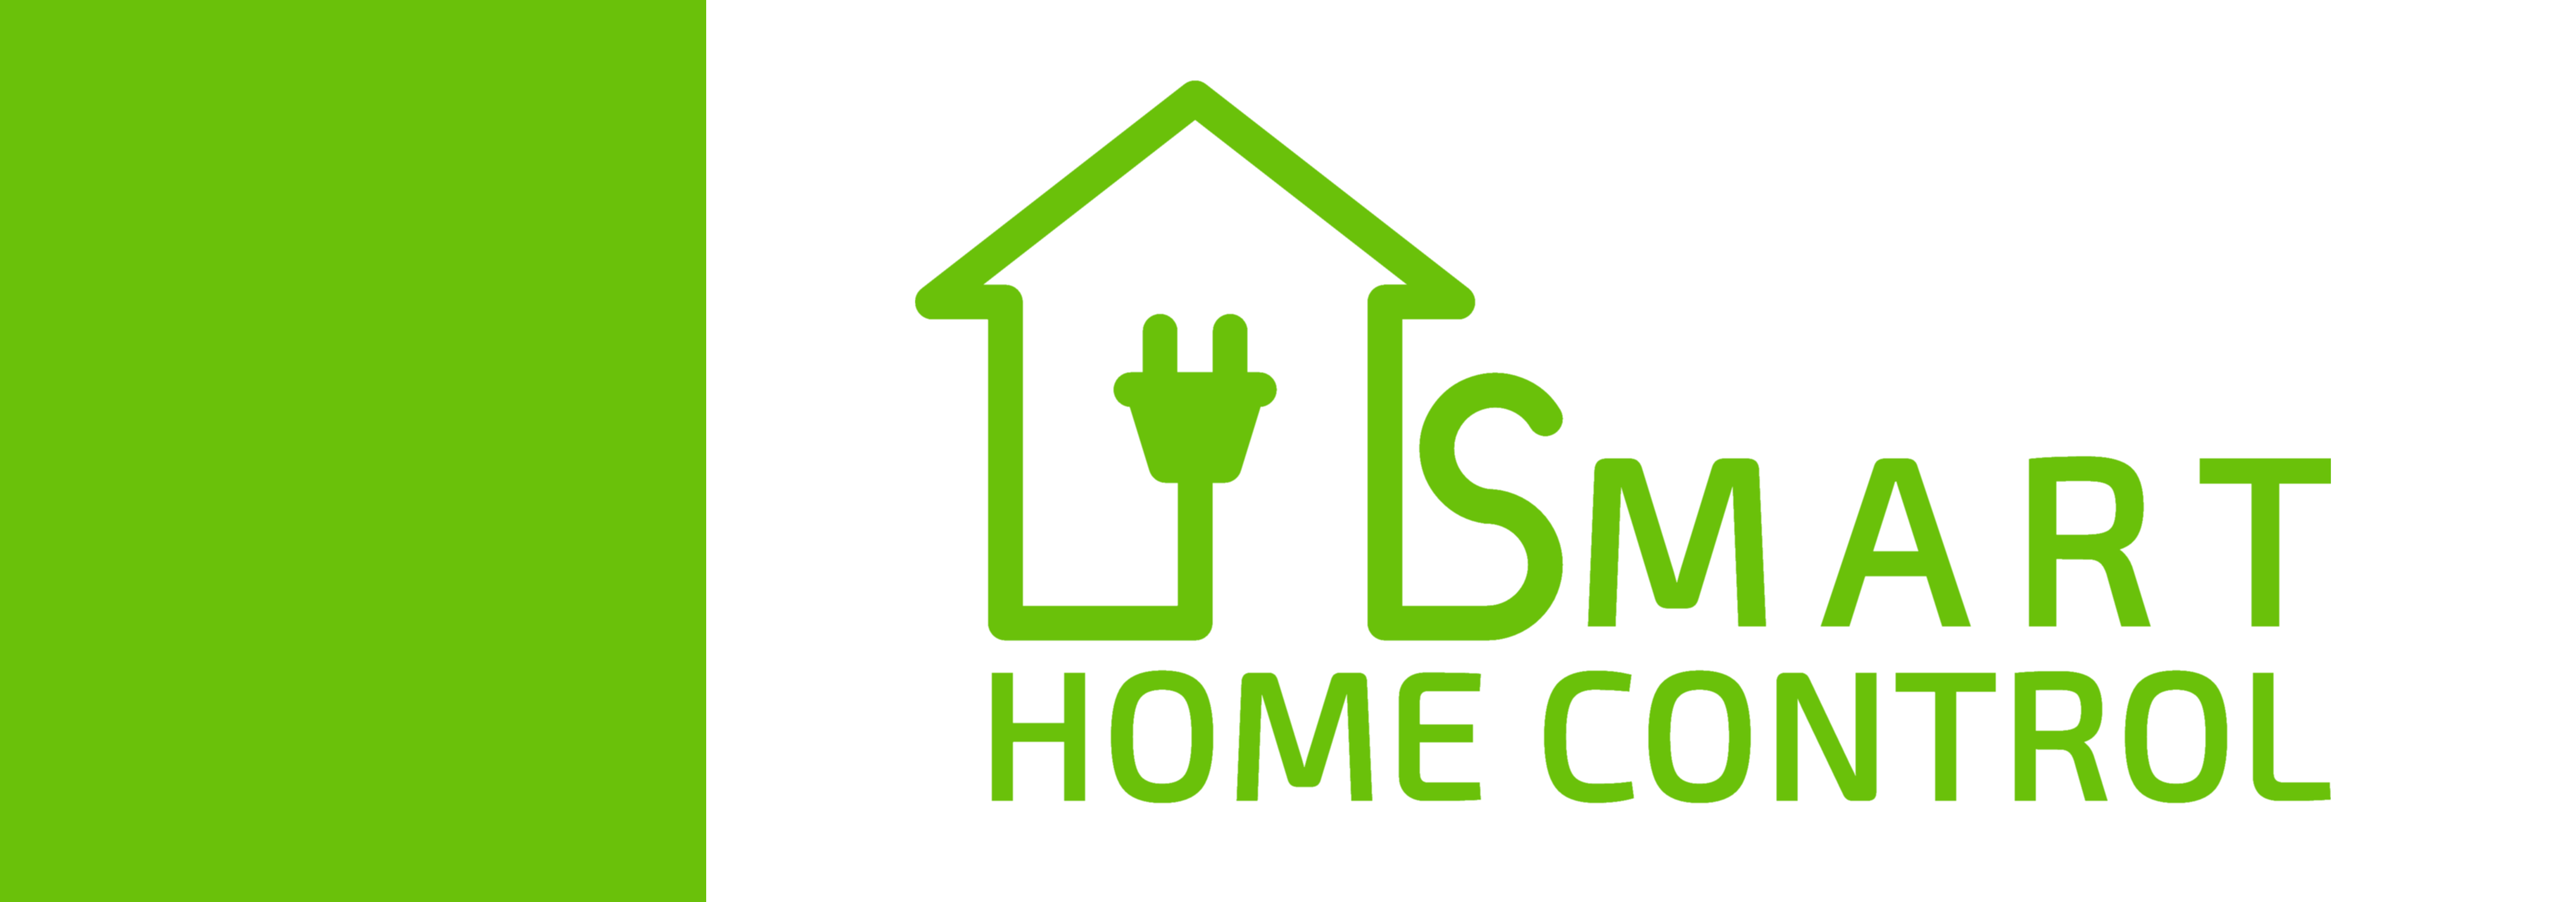 elektriciens Wortel Smart Home Control